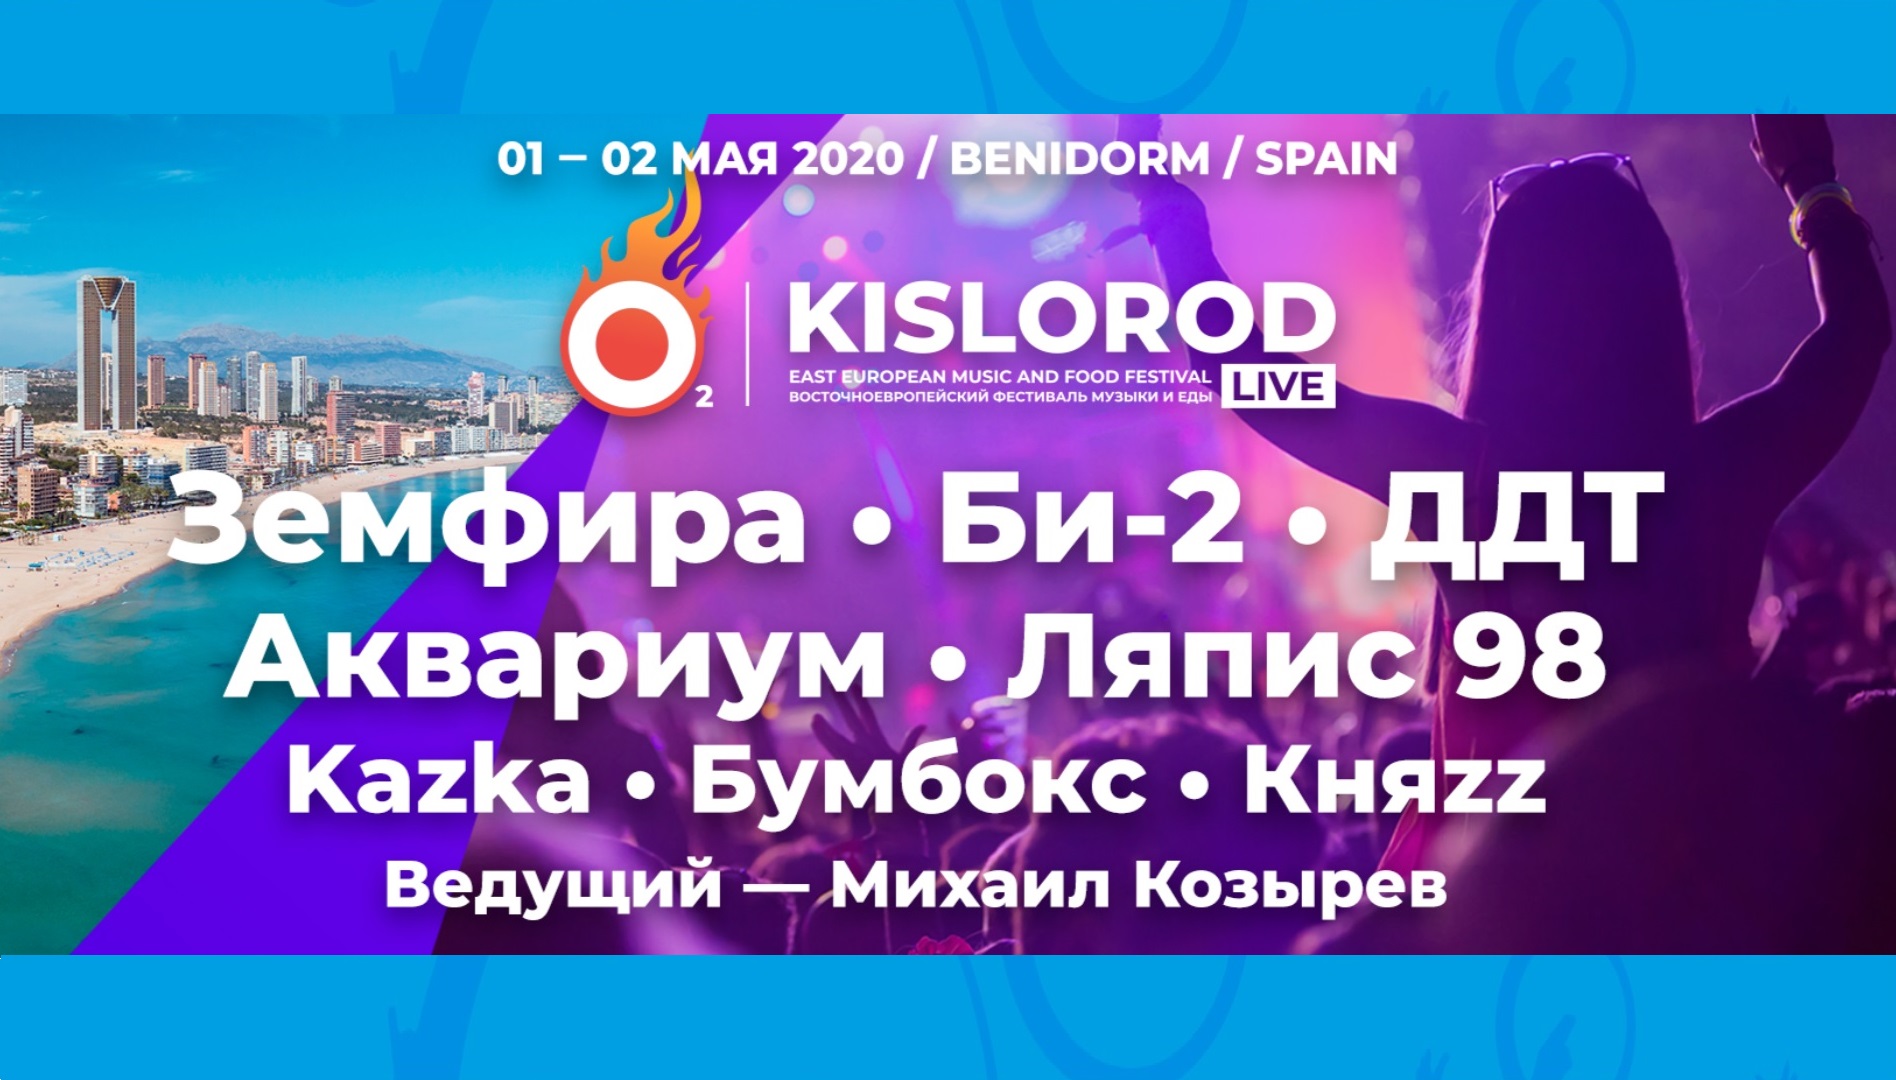 Фестиваль русского рока Кислород (Kislorod Live) в Испании, в городе Бенидорм.